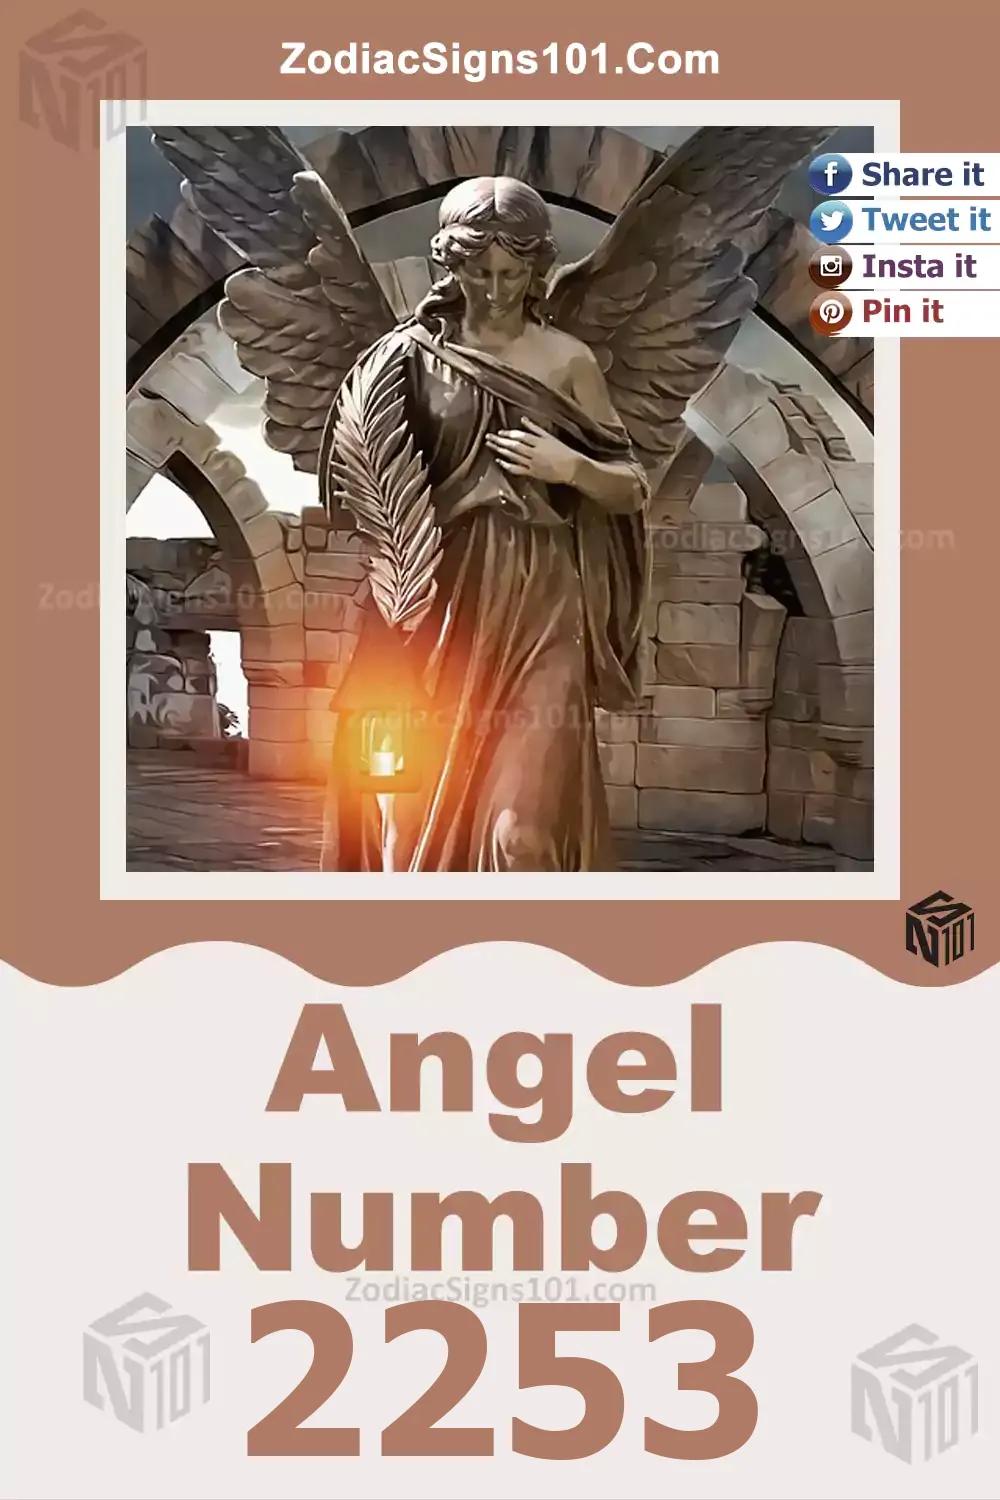 2253-Angel-Number-Meaning.jpg